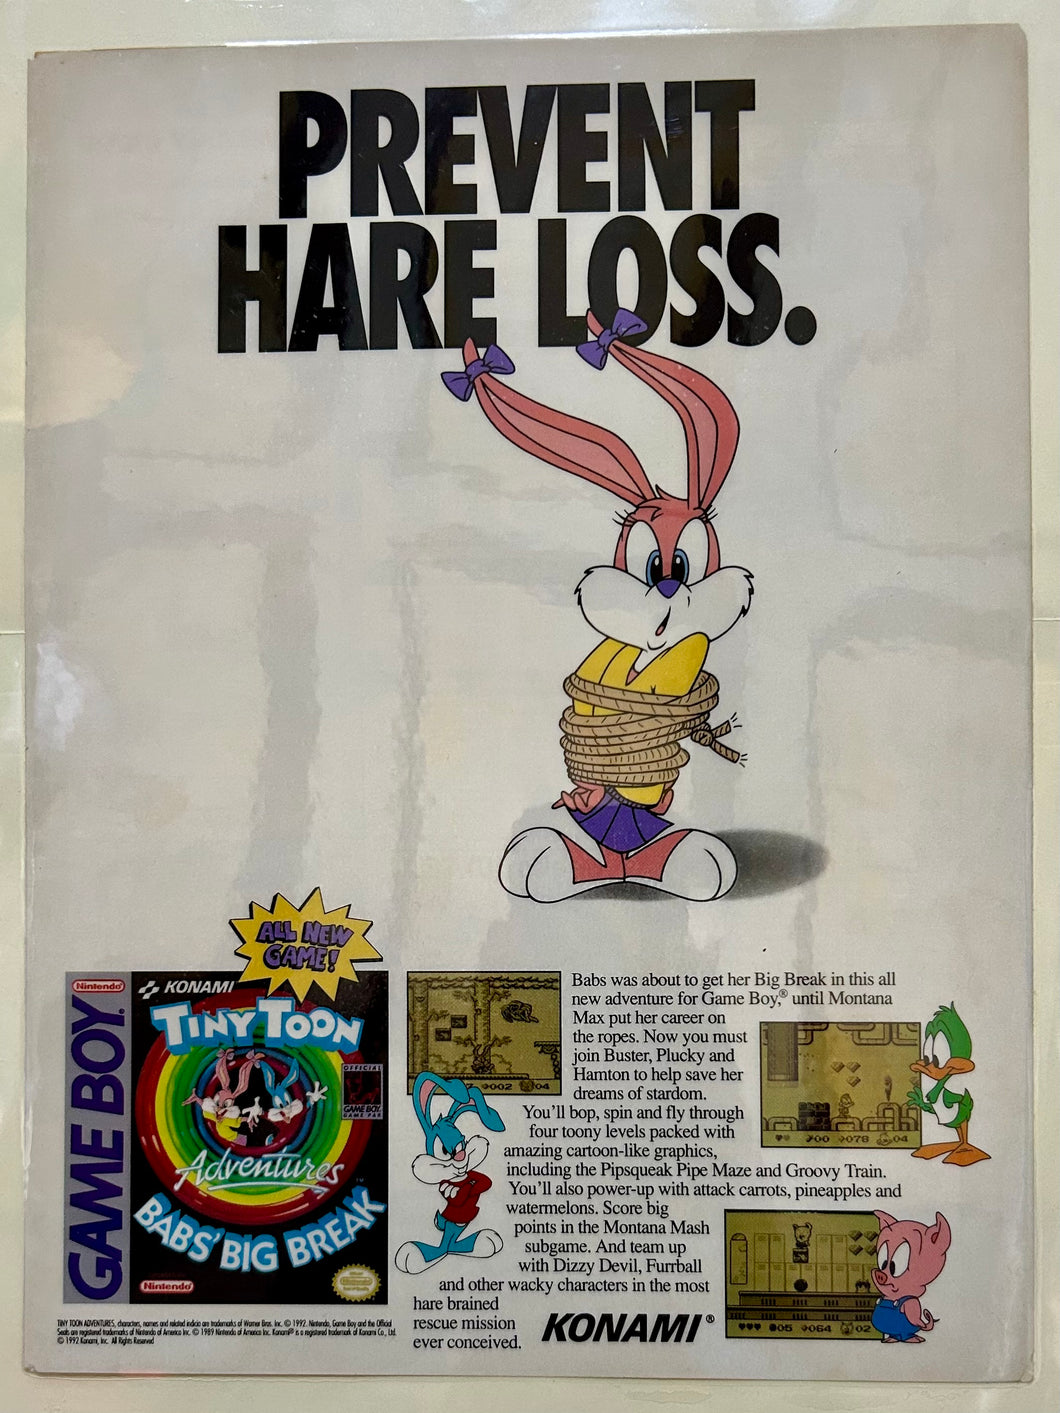 Tiny Toon Adventures: Babs' Big Break - GameBoy - Original Vintage Advertisement - Print Ads - Laminated A4 Poster